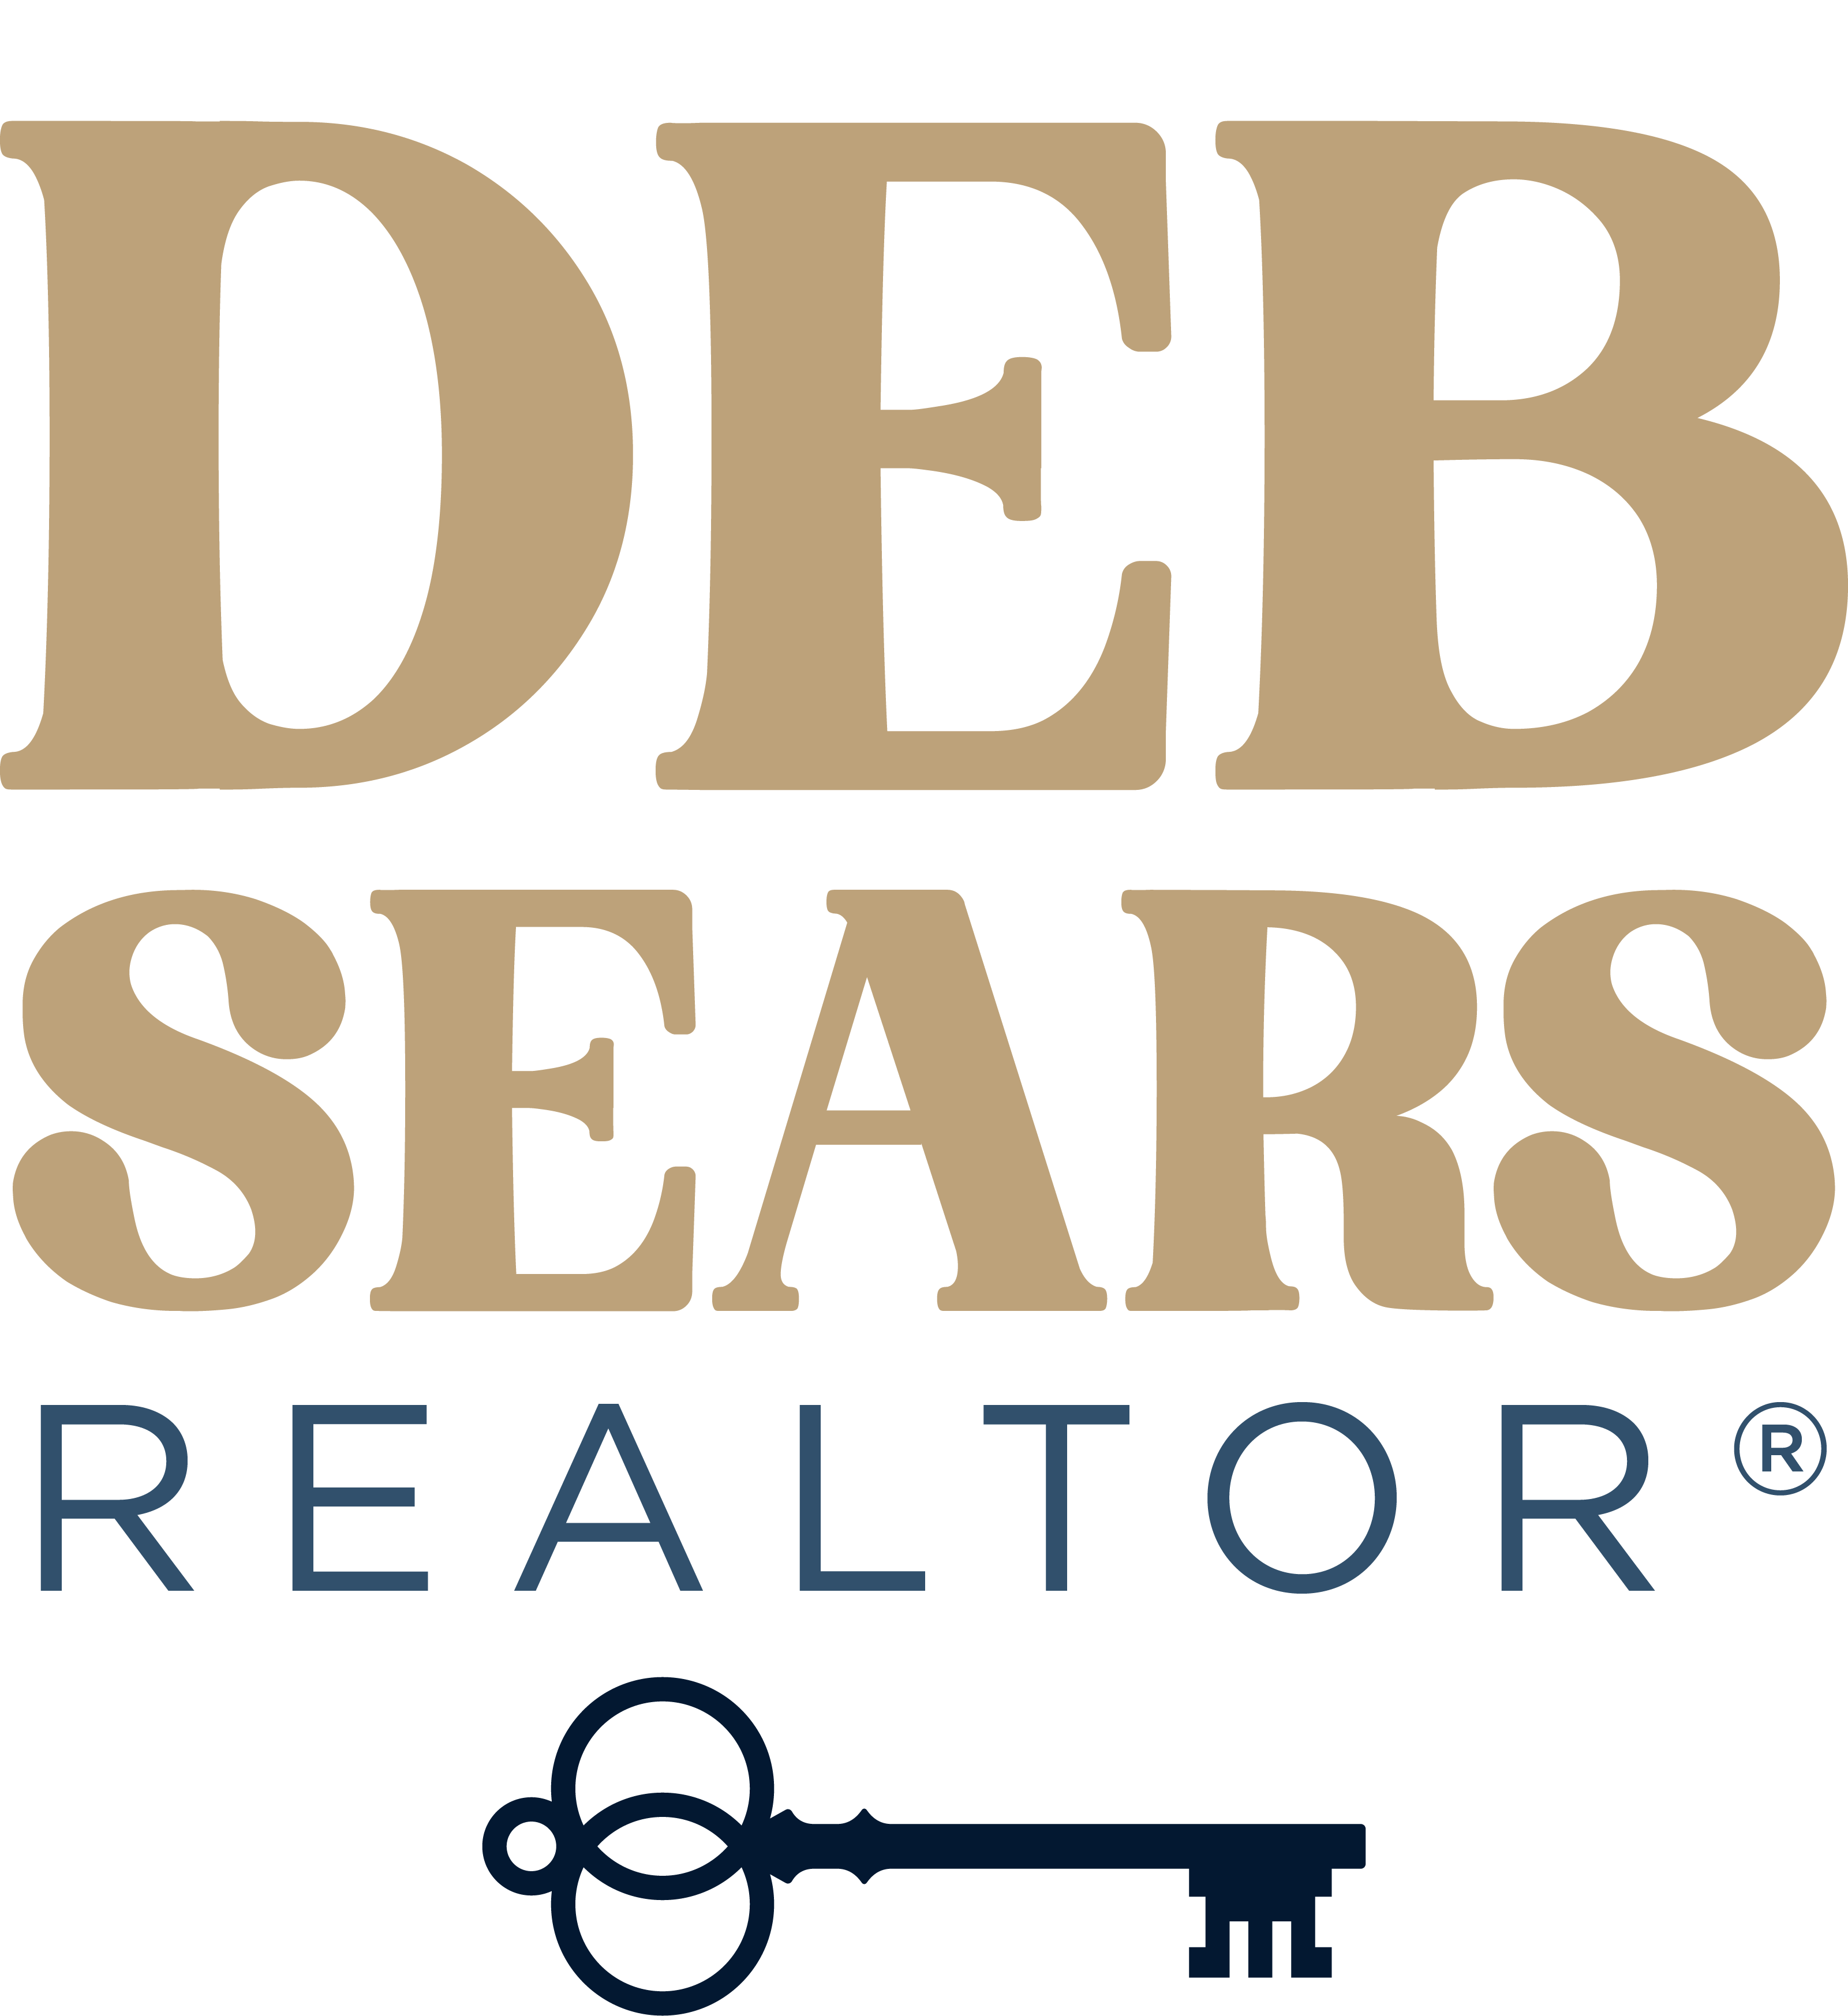 Deb Sears